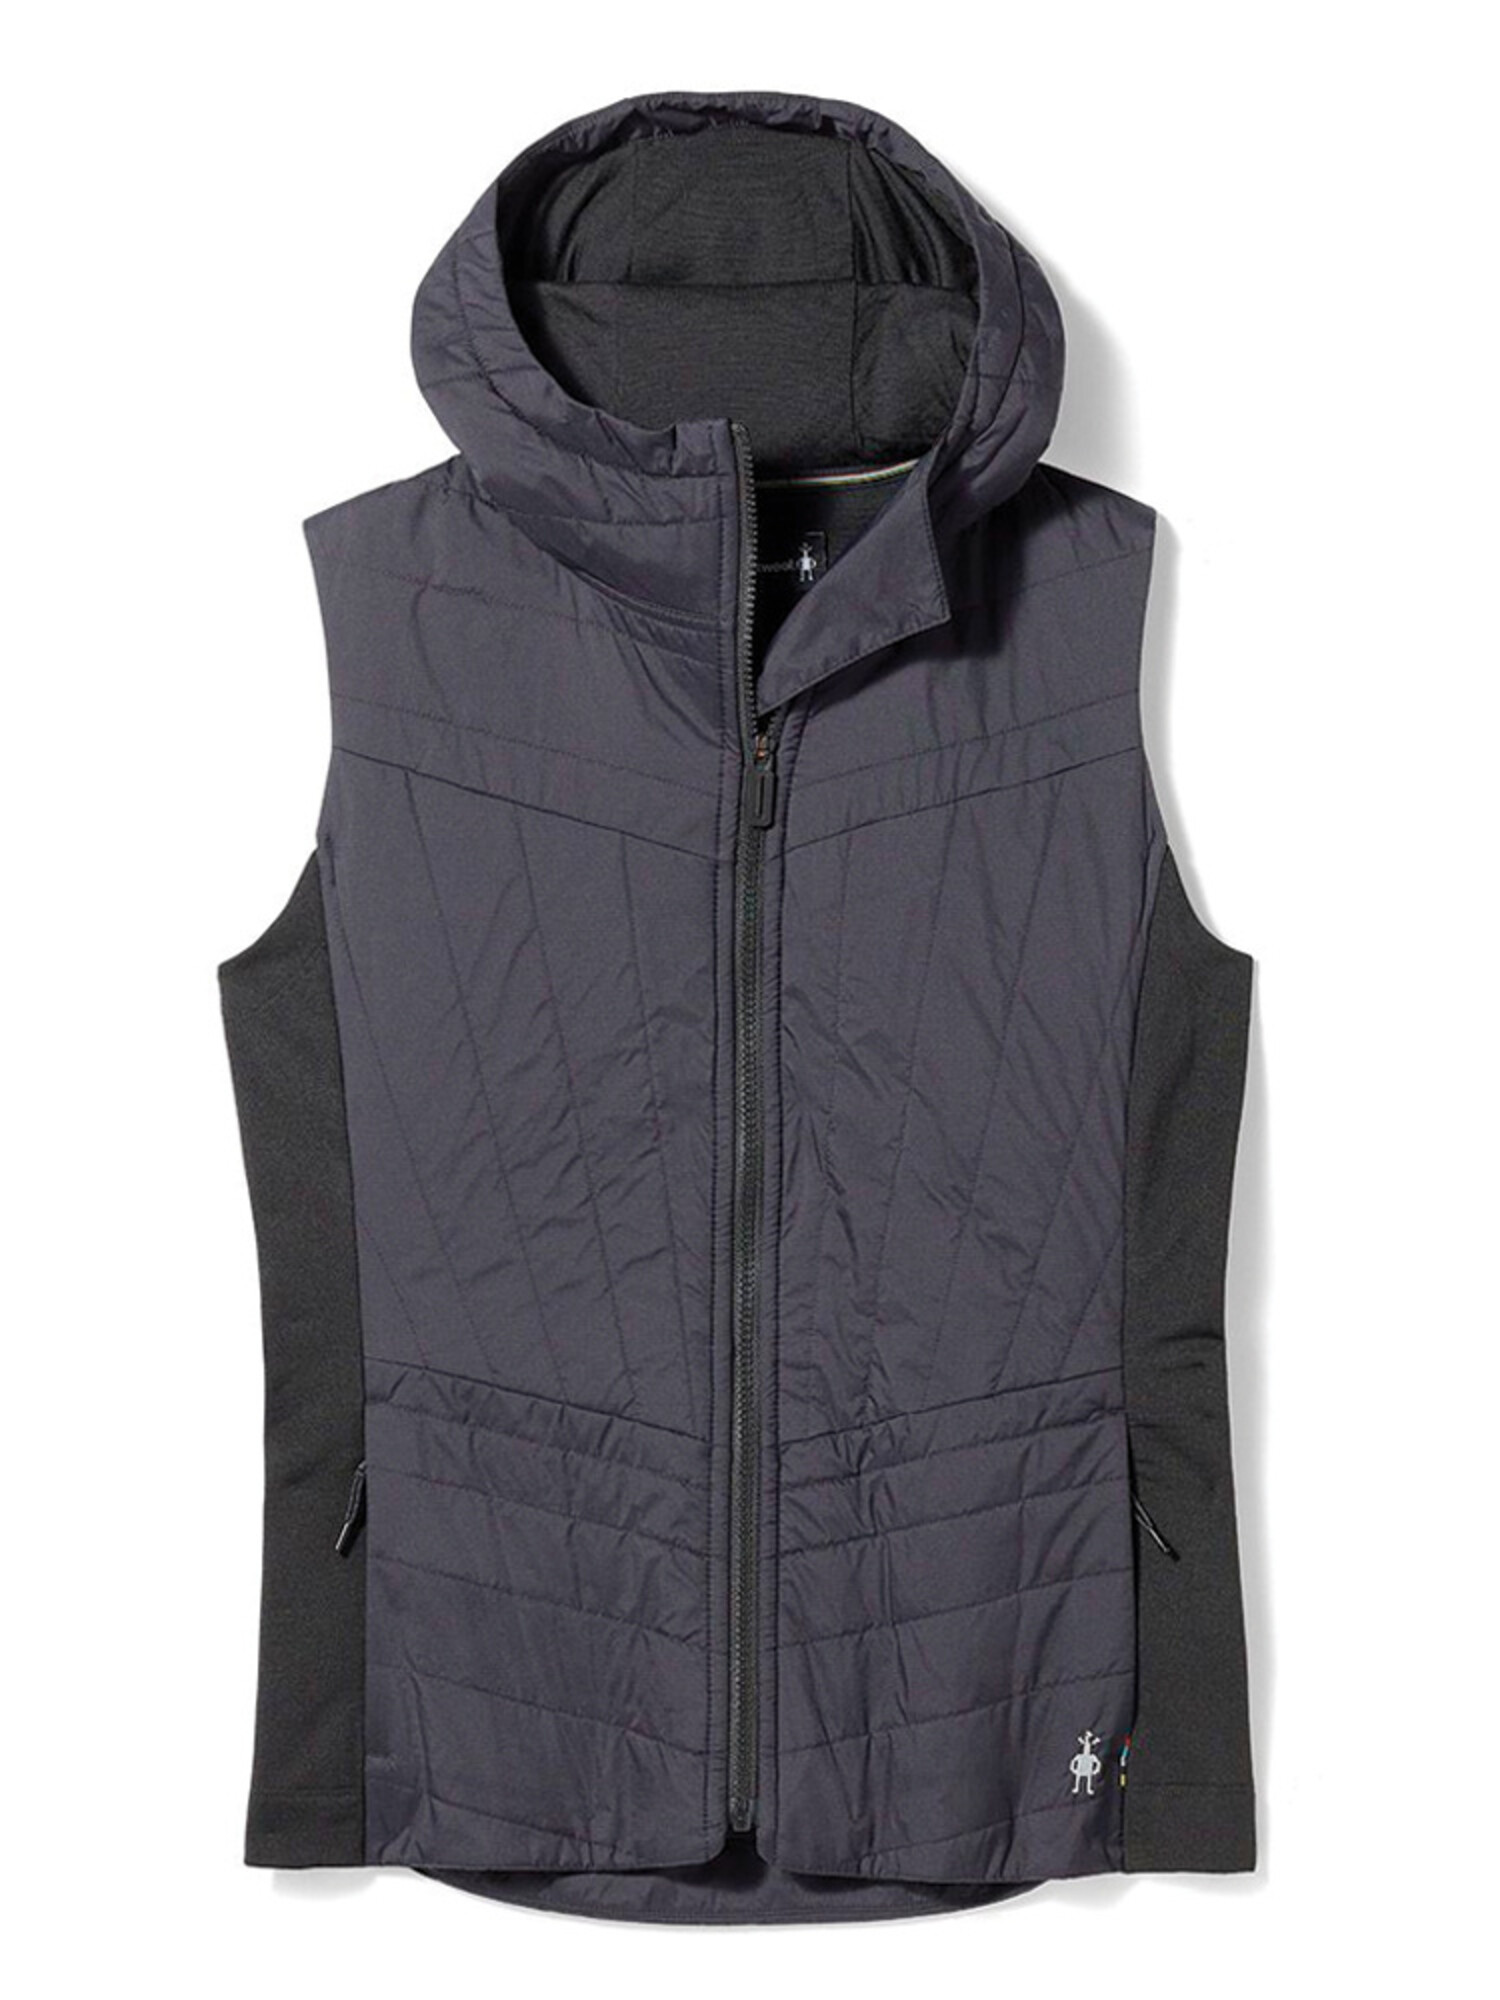 Shop Women Inner Woolblend HS Vest Type Thermal dark grey at Woollen Wear